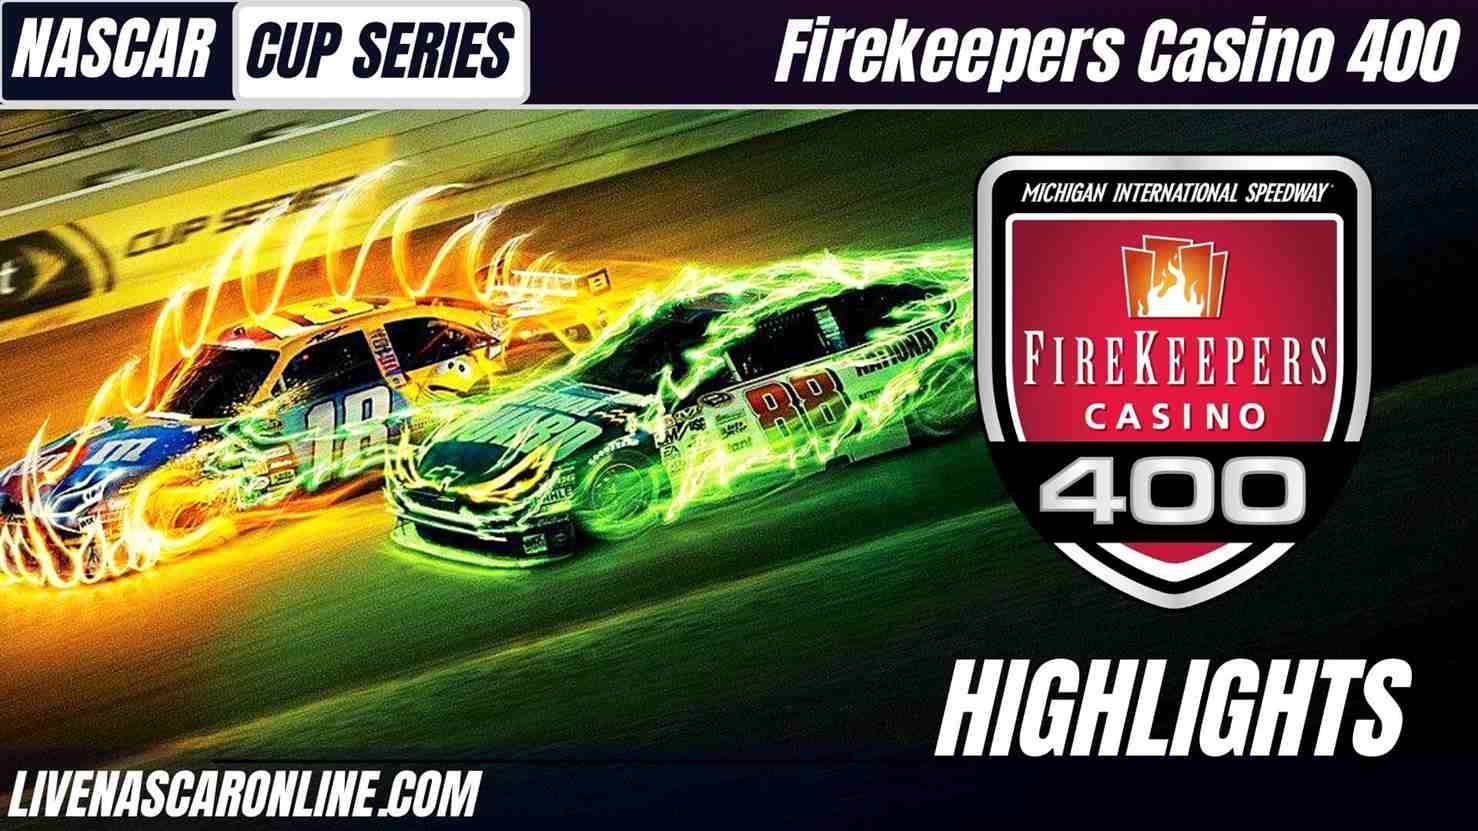 Firekeepers Casino 400 Highlights 2021 Nascar Cup Series